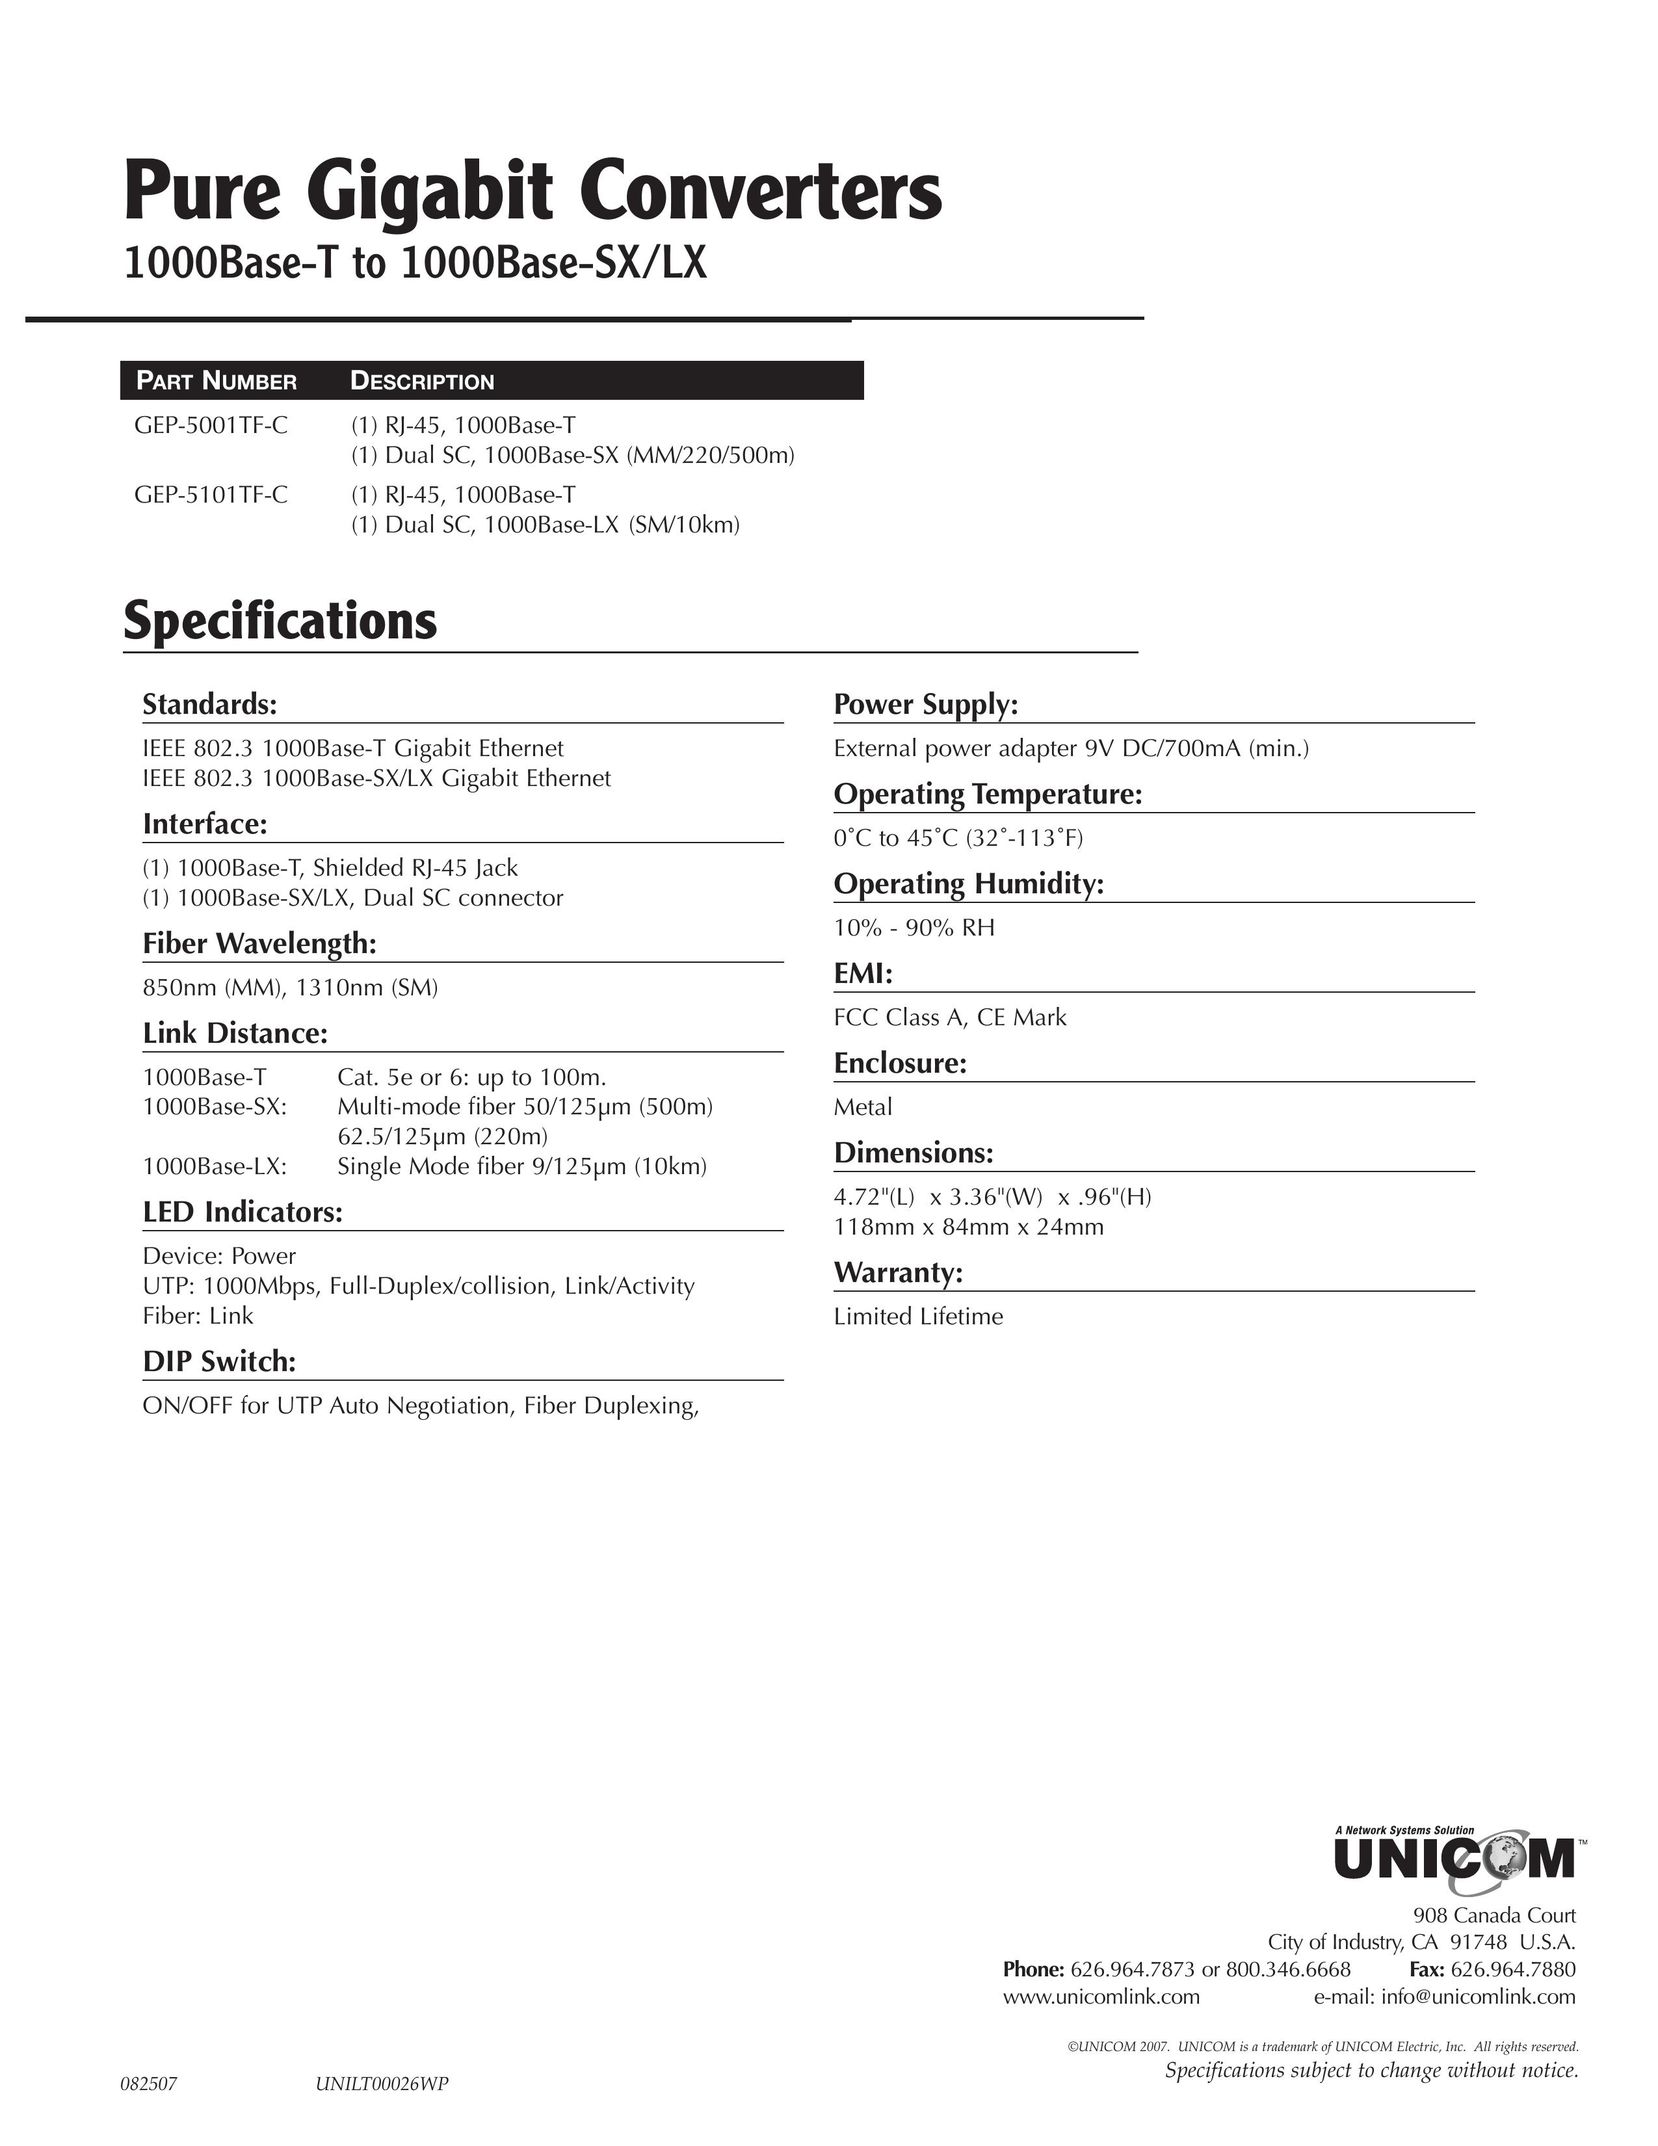 UNICOM Electric GEP-5001TF-C Network Card User Manual